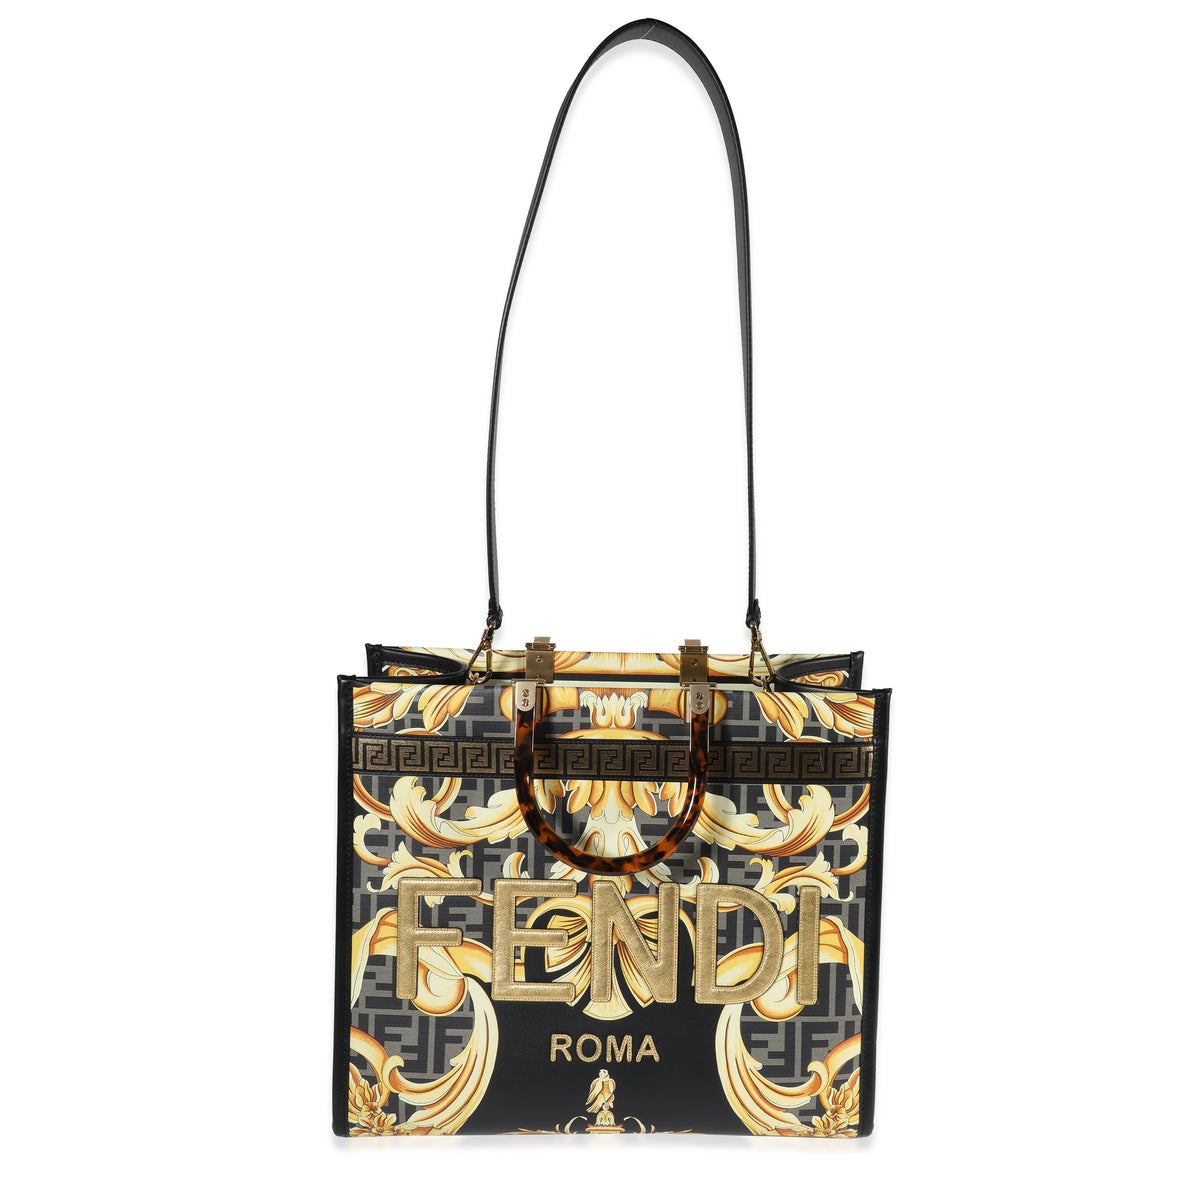 Fendi Versace Bag - 12 For Sale on 1stDibs  fendace tote bag price, fendi  x versace bag, fendi versace collab bag price